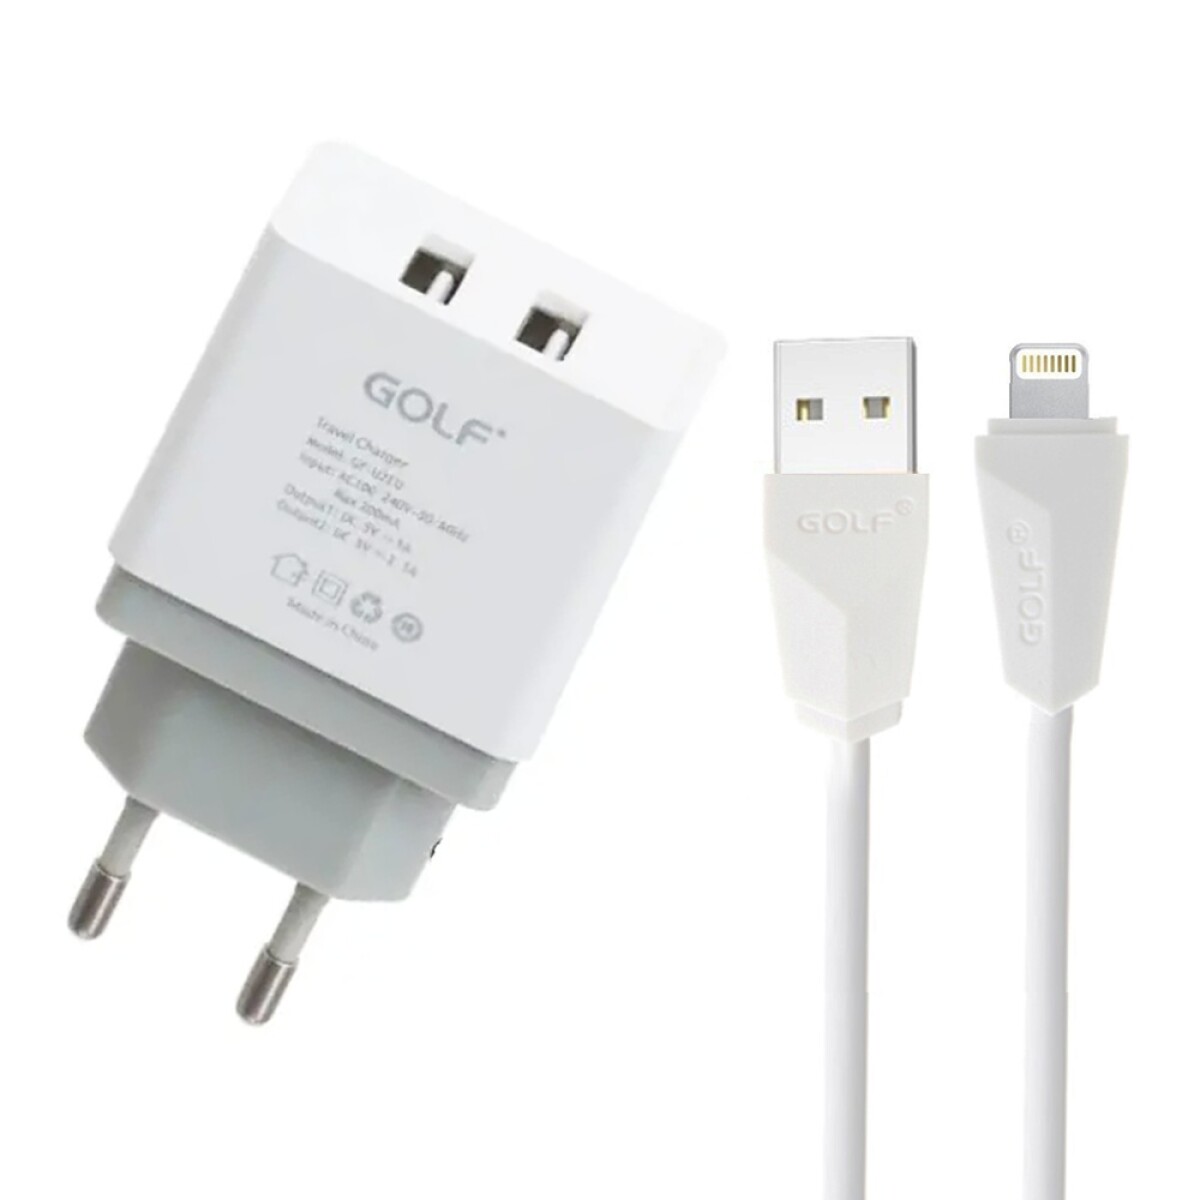 kit de Cargador Doble USB para Pared y Cable Iphone de 1Mt Golf GF-U2SET - Blanco 